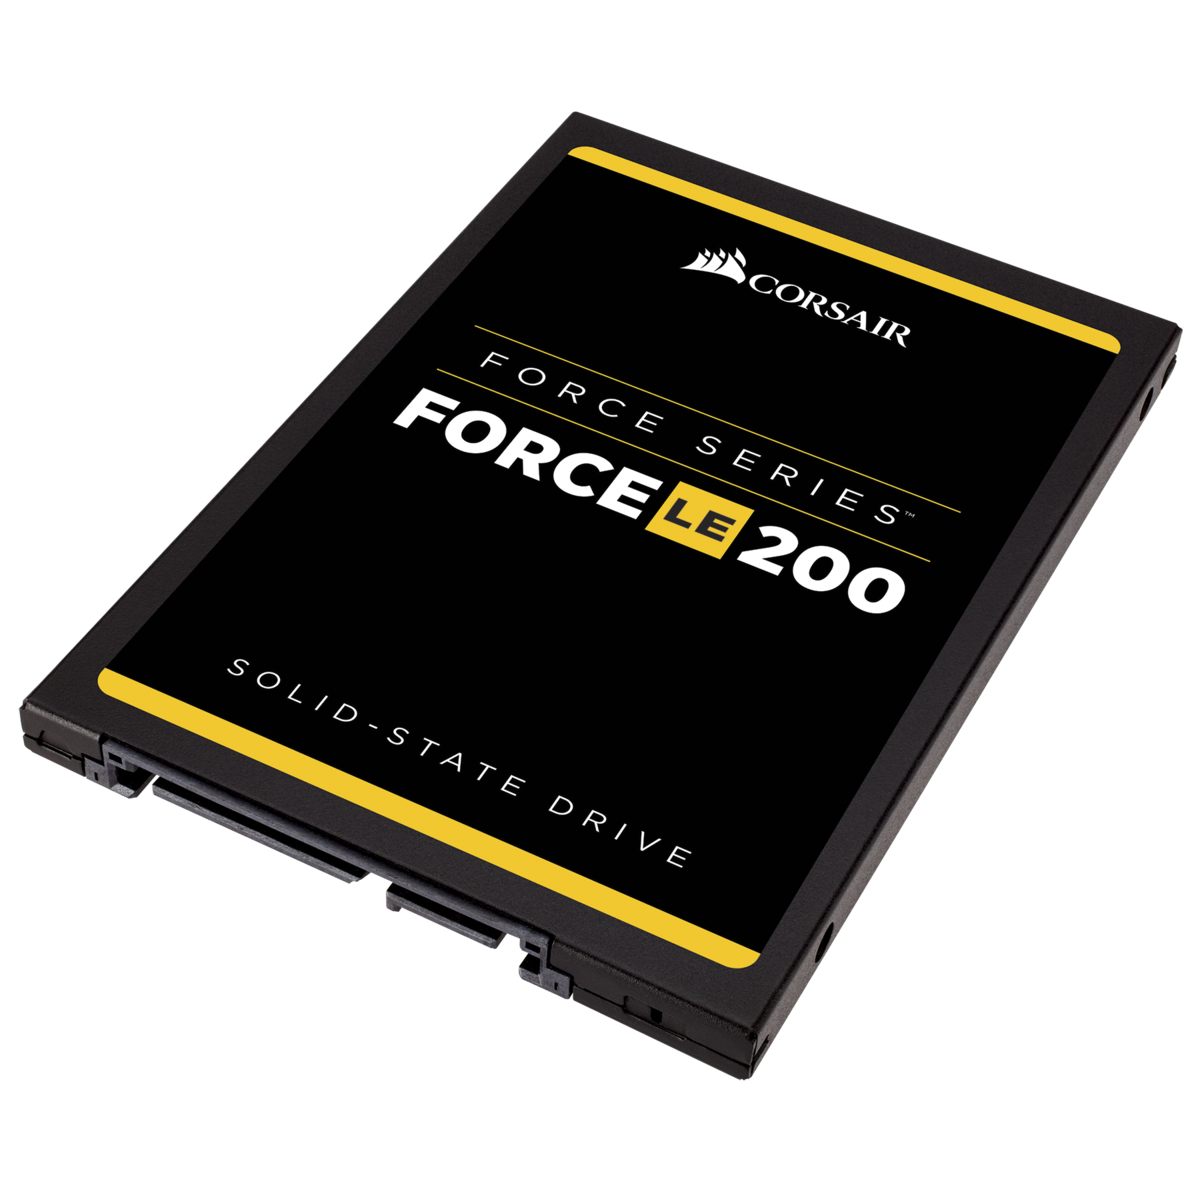 Corsair Force LE200 CSSD-F120GBLE200/RF2 2.5" SSD 120GB / Repack/Refurb